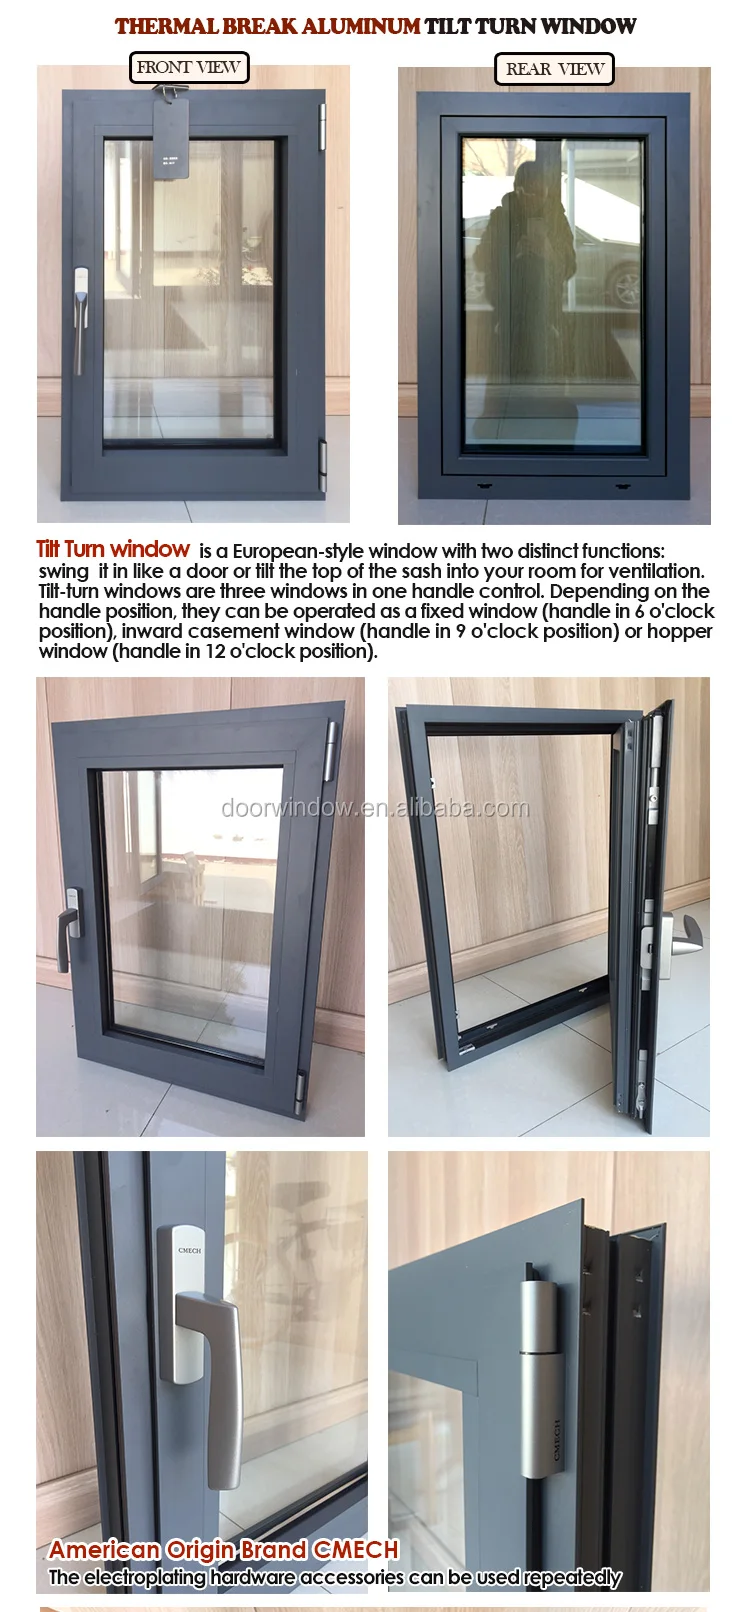 Extrusion profile aluminium frame and double glass window